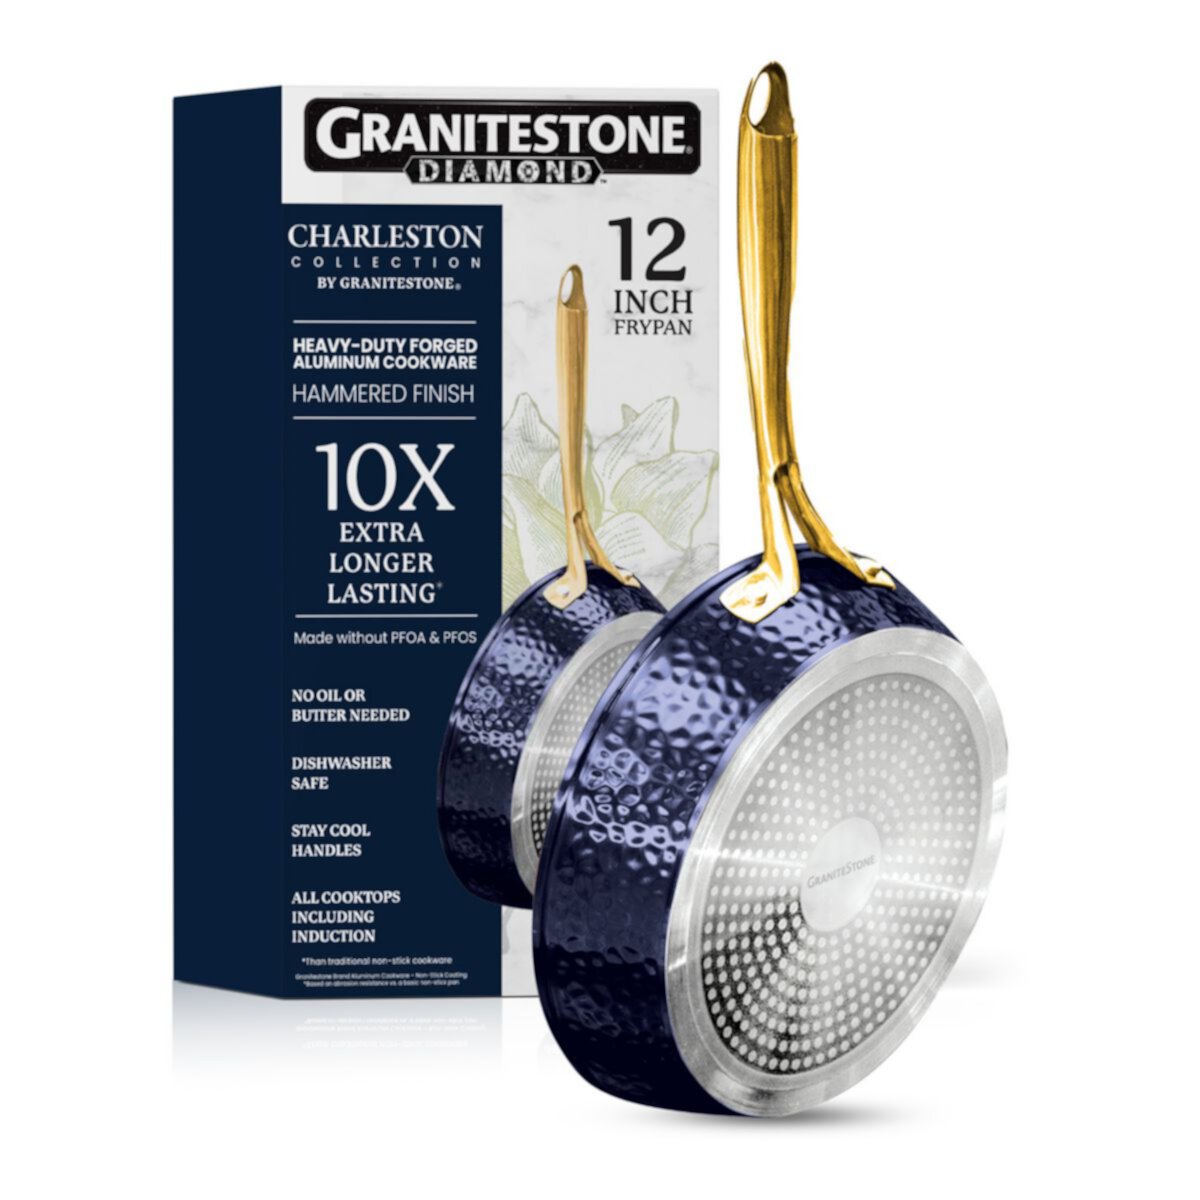 Коллекция Granitestone Diamond Charleston Collection 12-дюймовая кованая сковорода с антипригарным покрытием Granite Stone Diamond